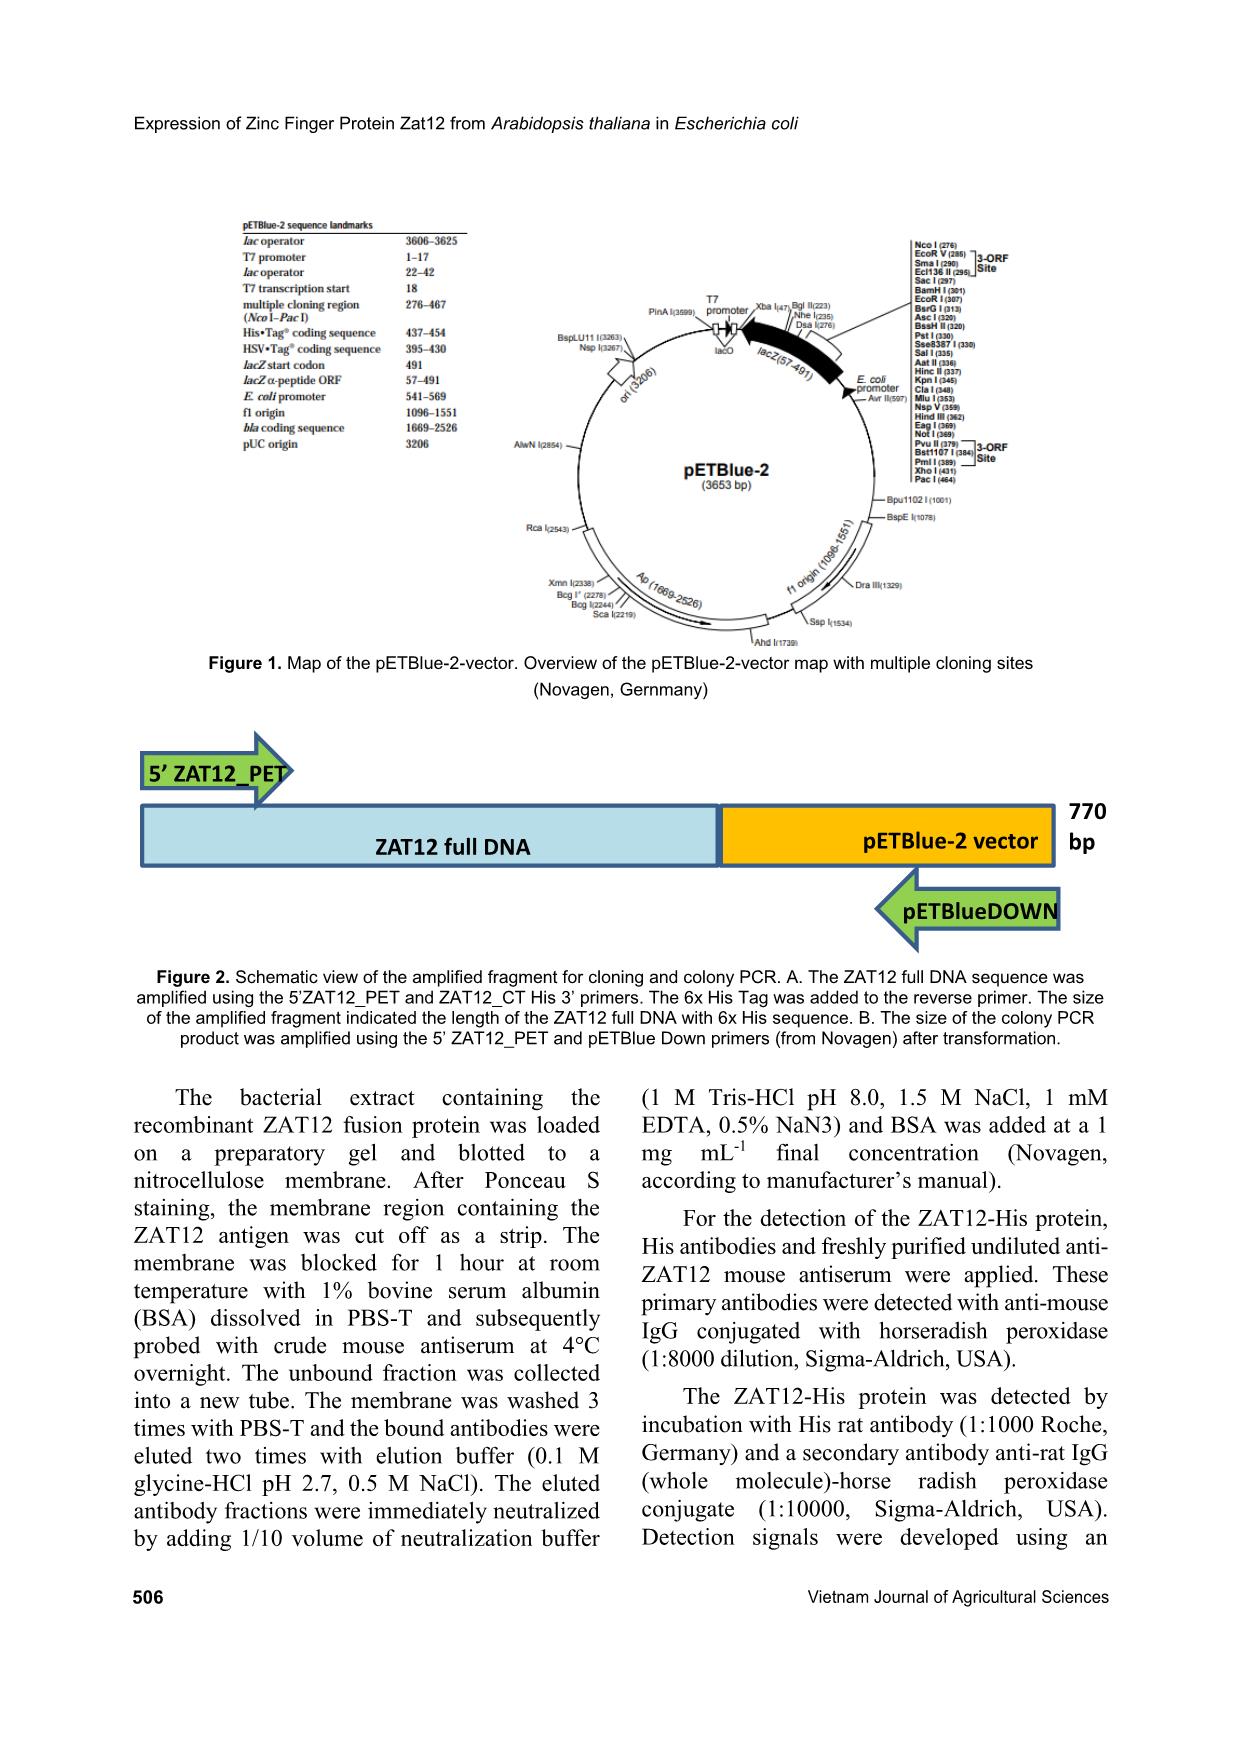 Expression of Zinc Finger Protein Zat12 from Arabidopsis thaliana in Escherichia coli trang 3